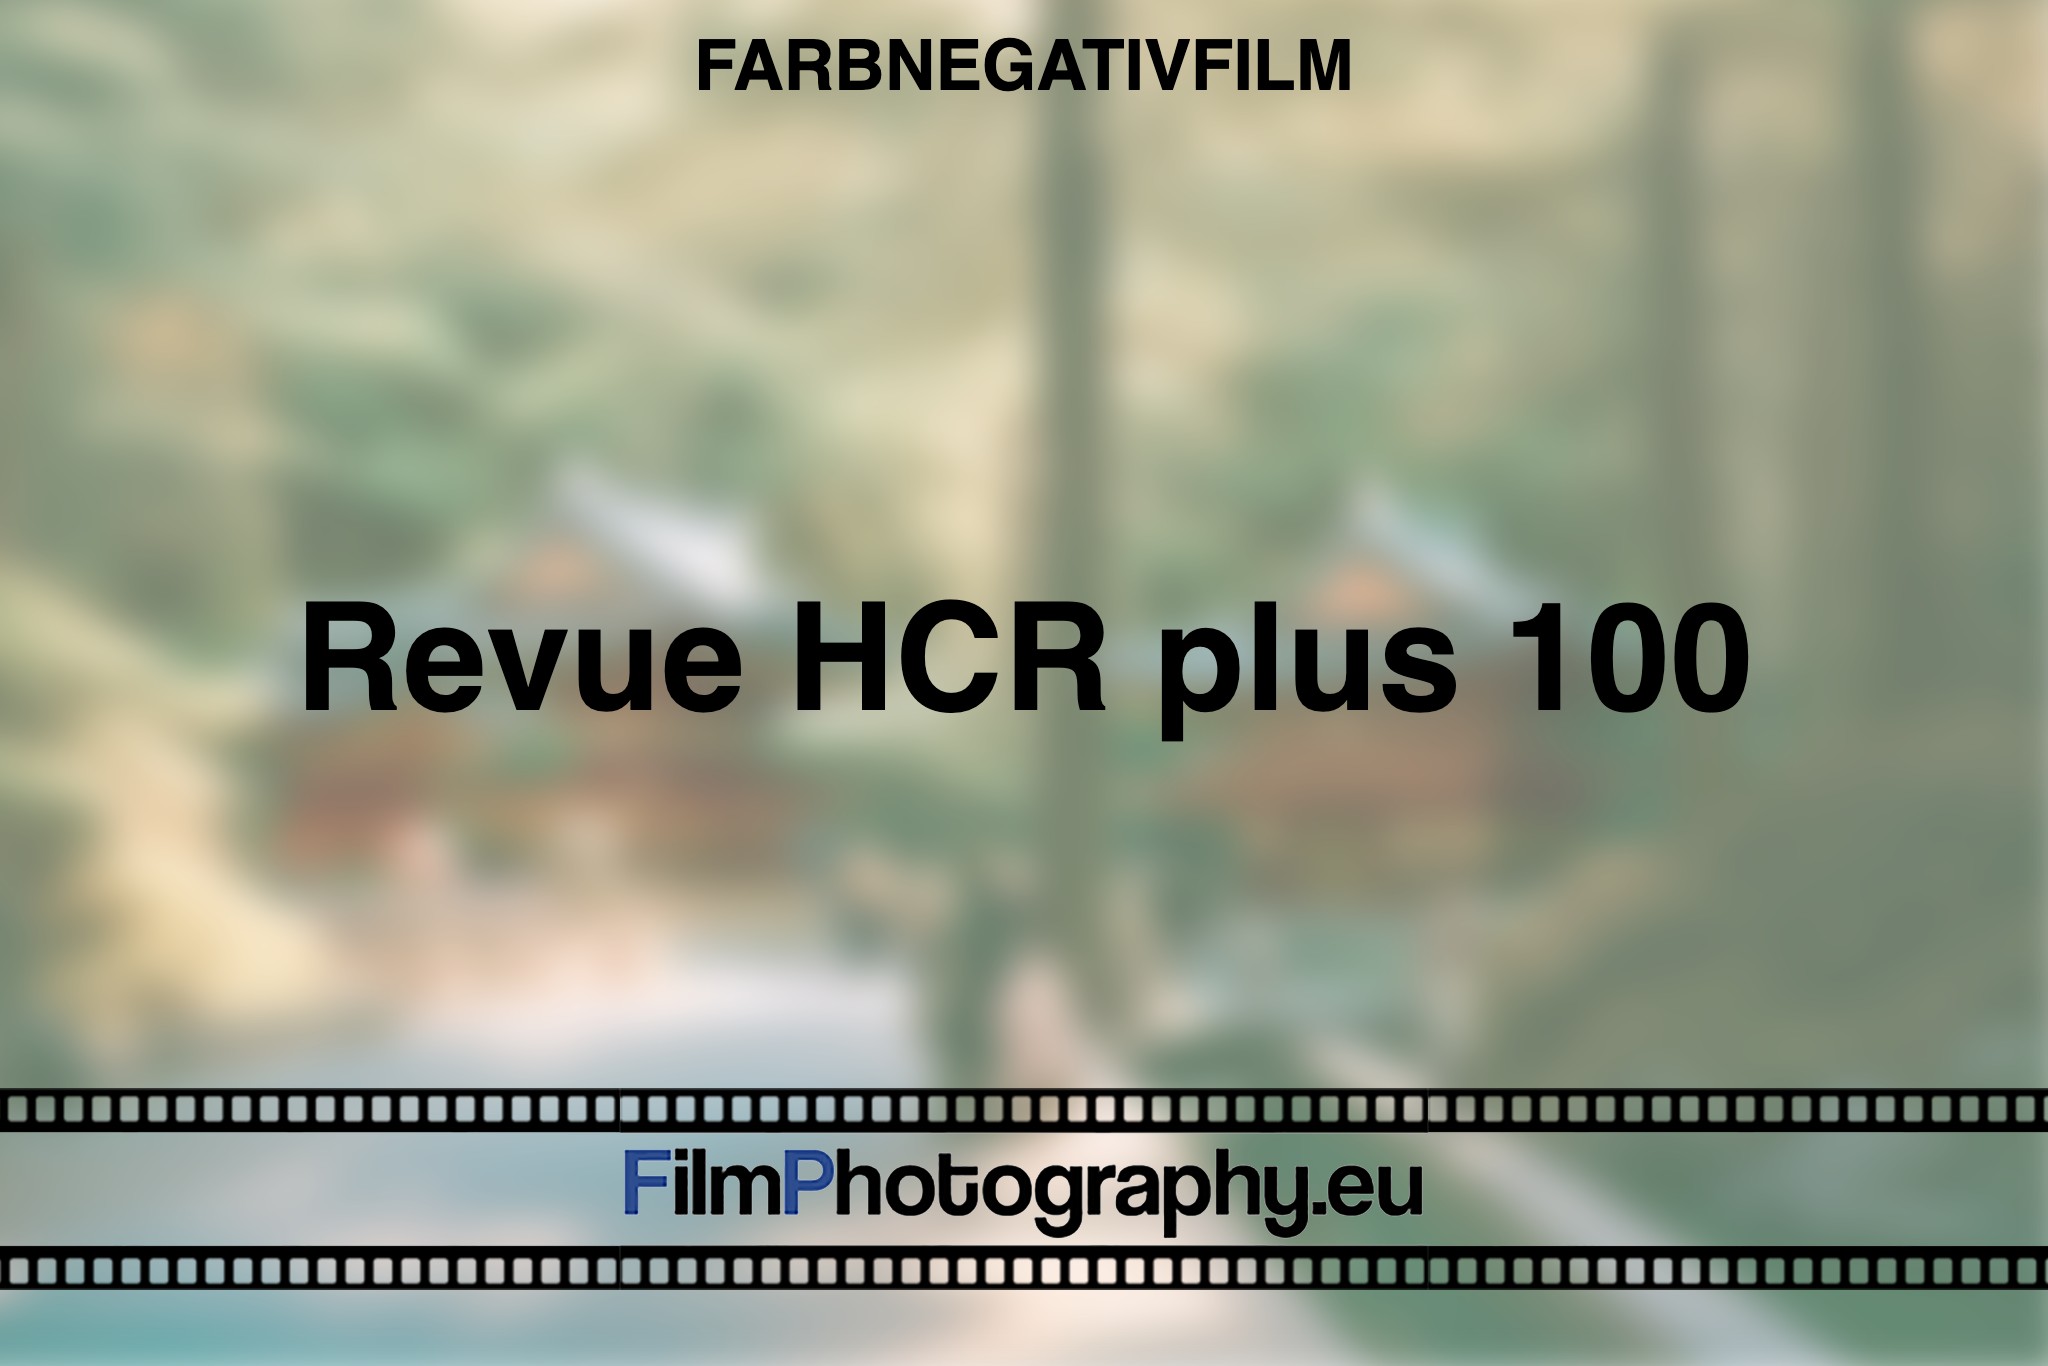 revue-hcr-plus-100-farbnegativfilm-bnv